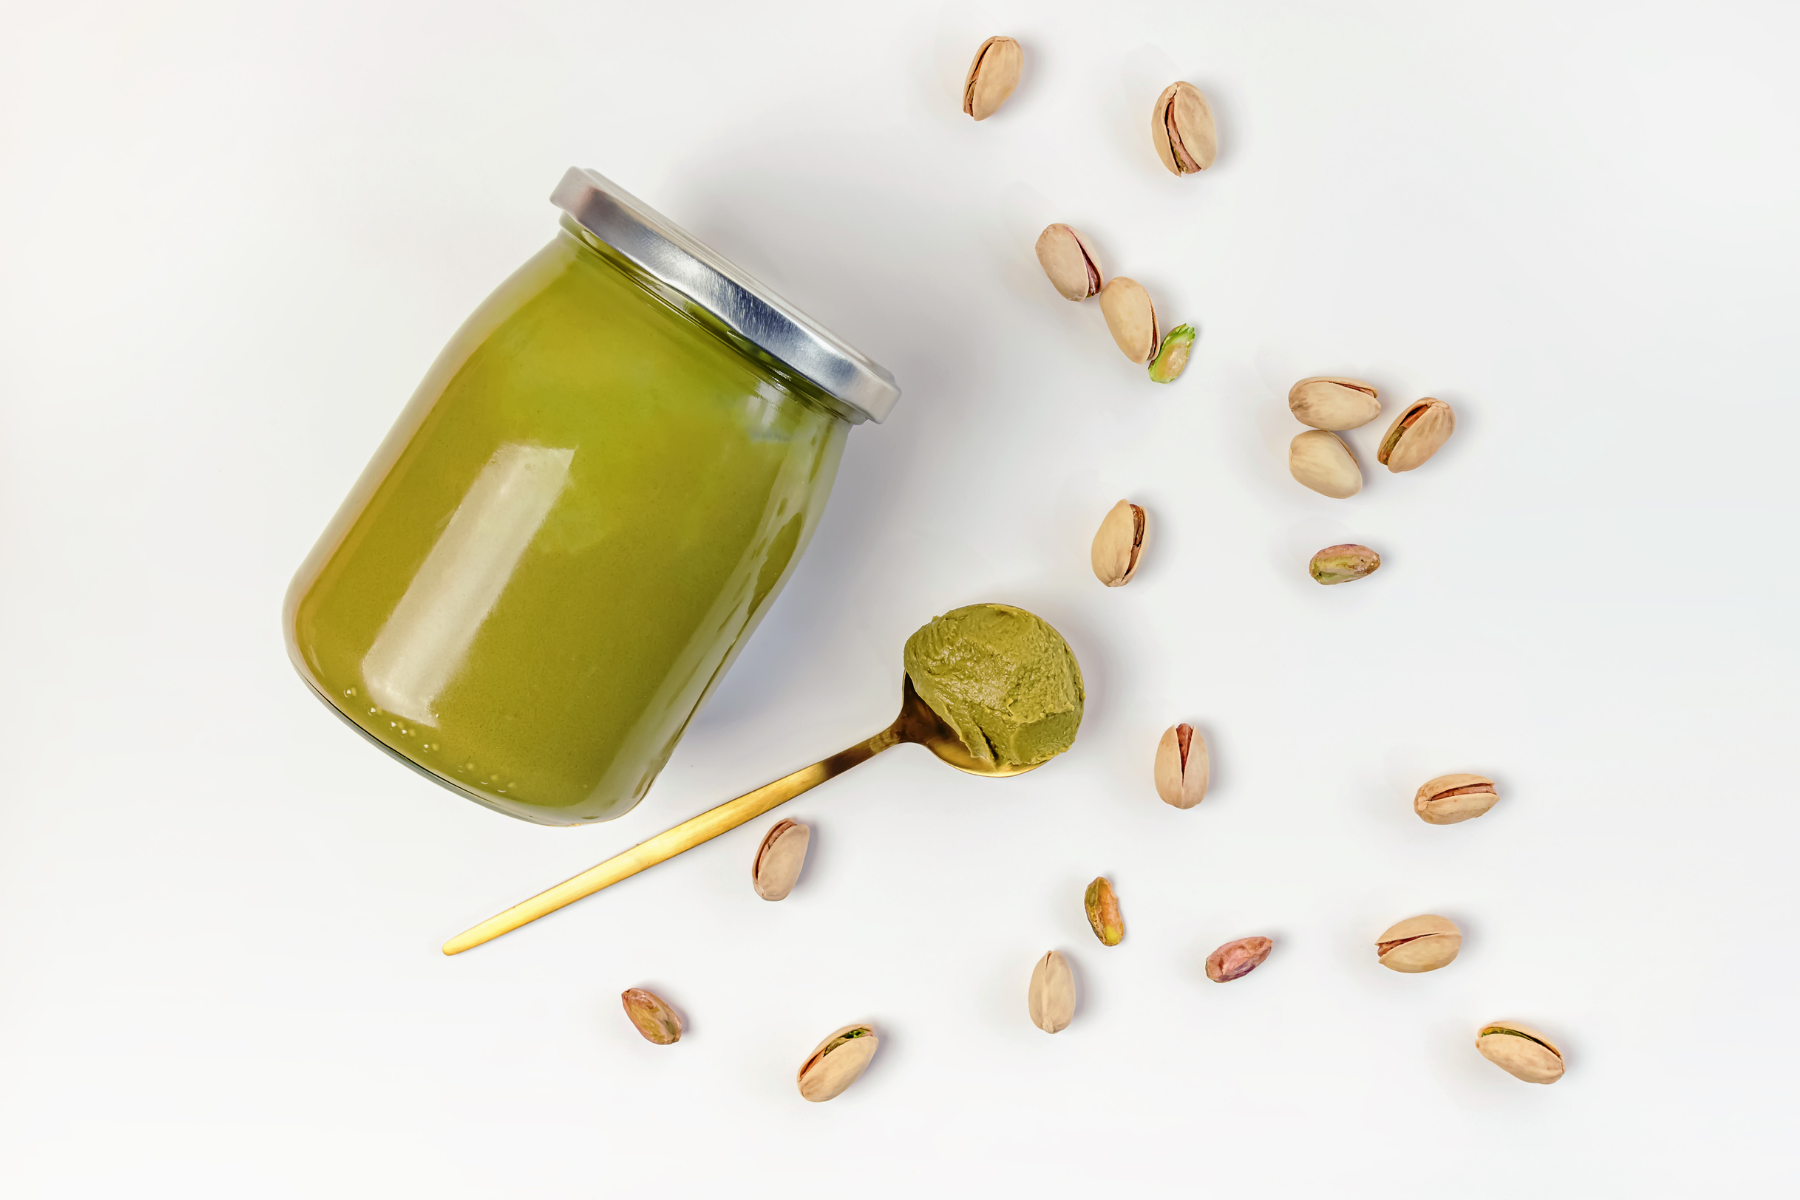 A jar of pistachio paste next to some loose pistachio against a white background.